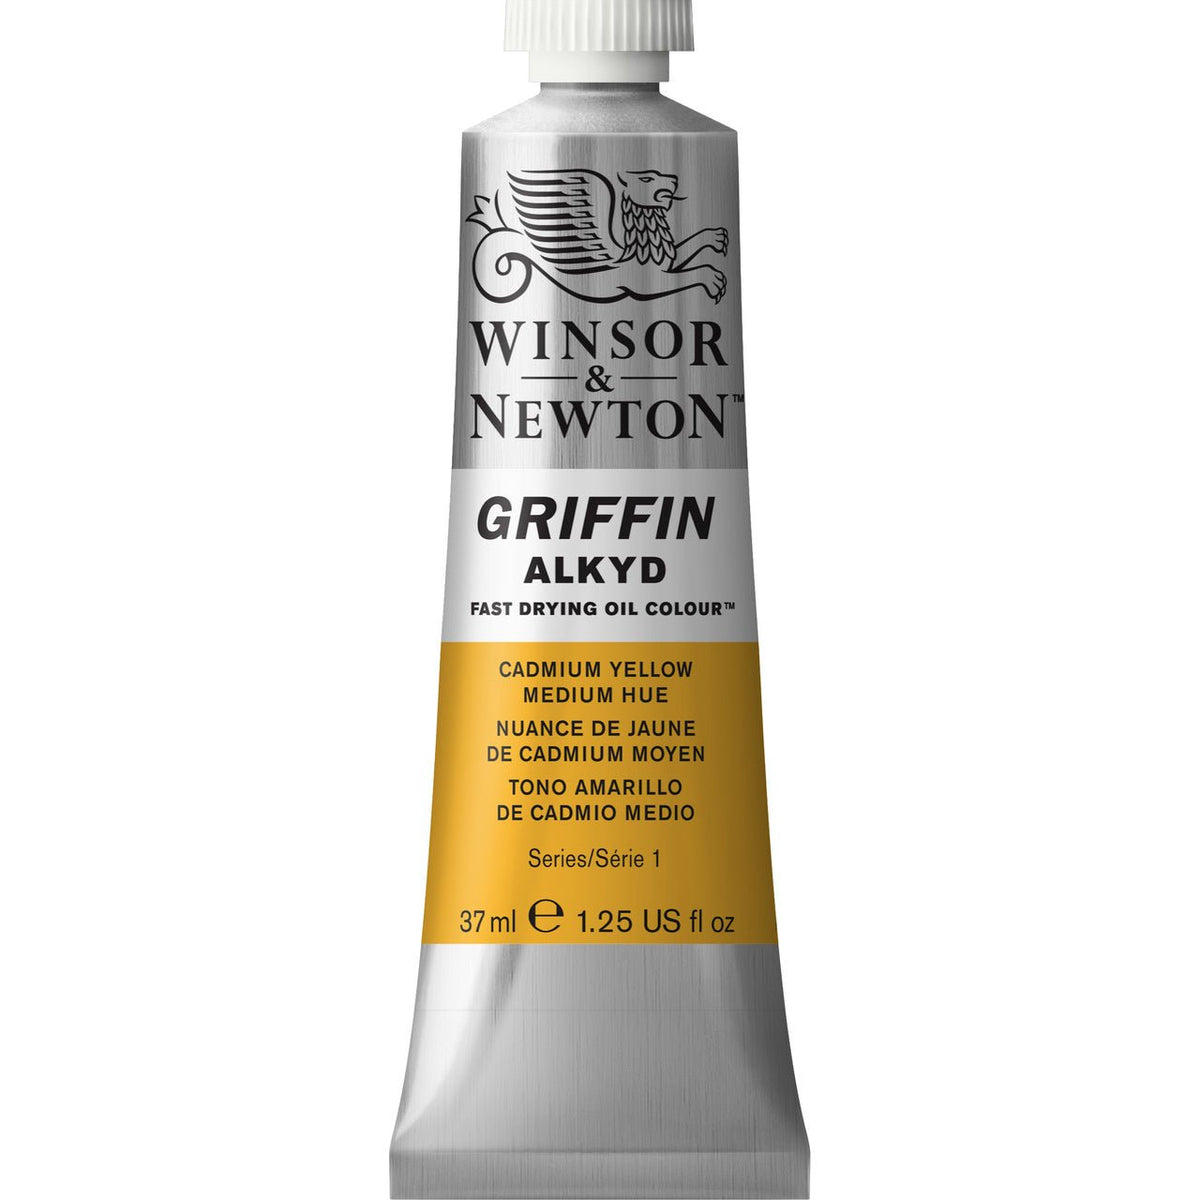 Winsor & Newton Griffin Alkyd 37ml Cadmium Yellow Medium Hue - merriartist.com